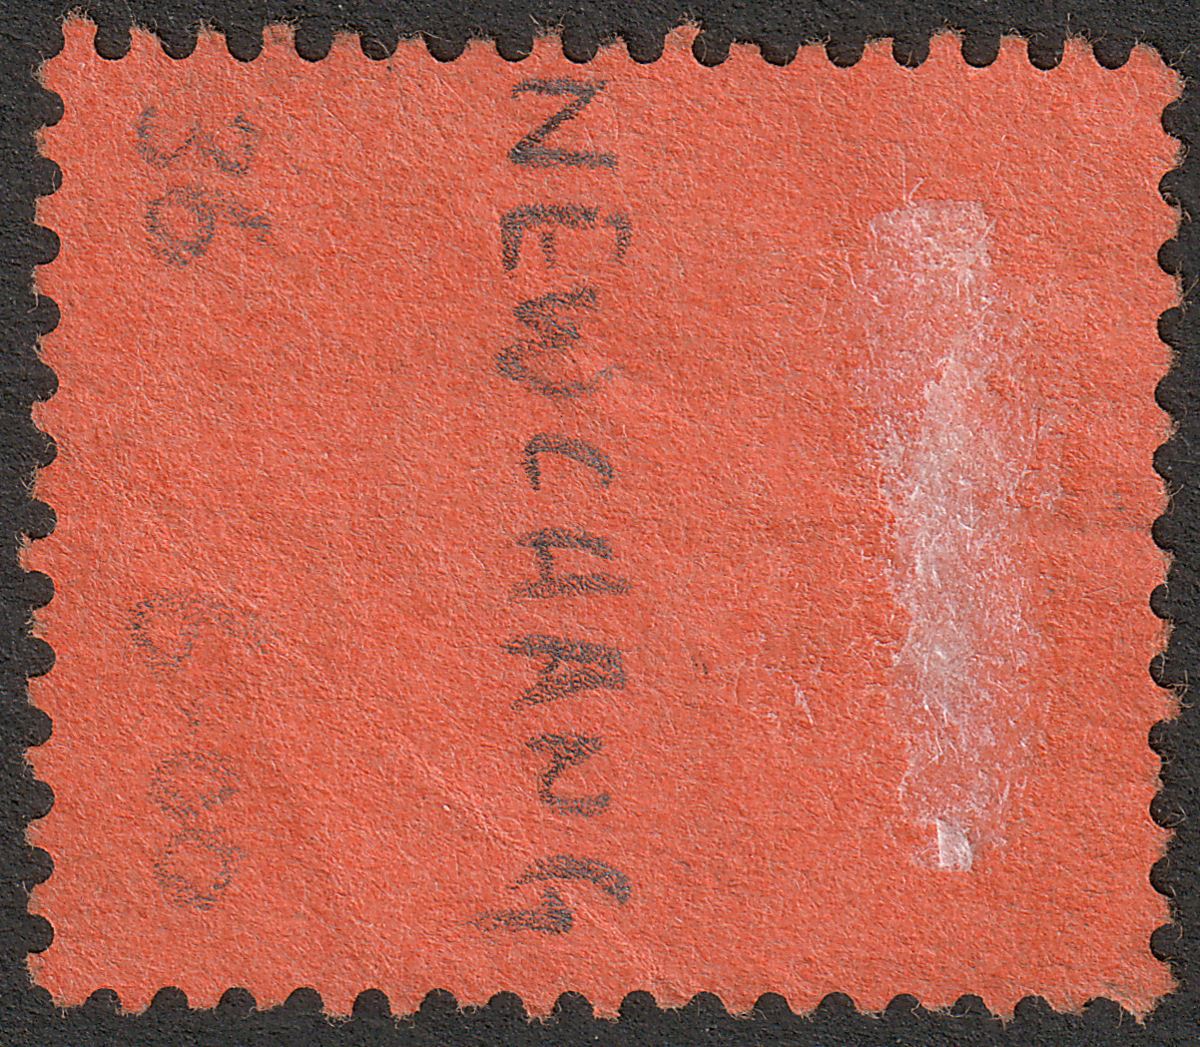 Hong Kong 1899 QV 10c Used with Newchwang IPO Mark and Shanghai Postmark